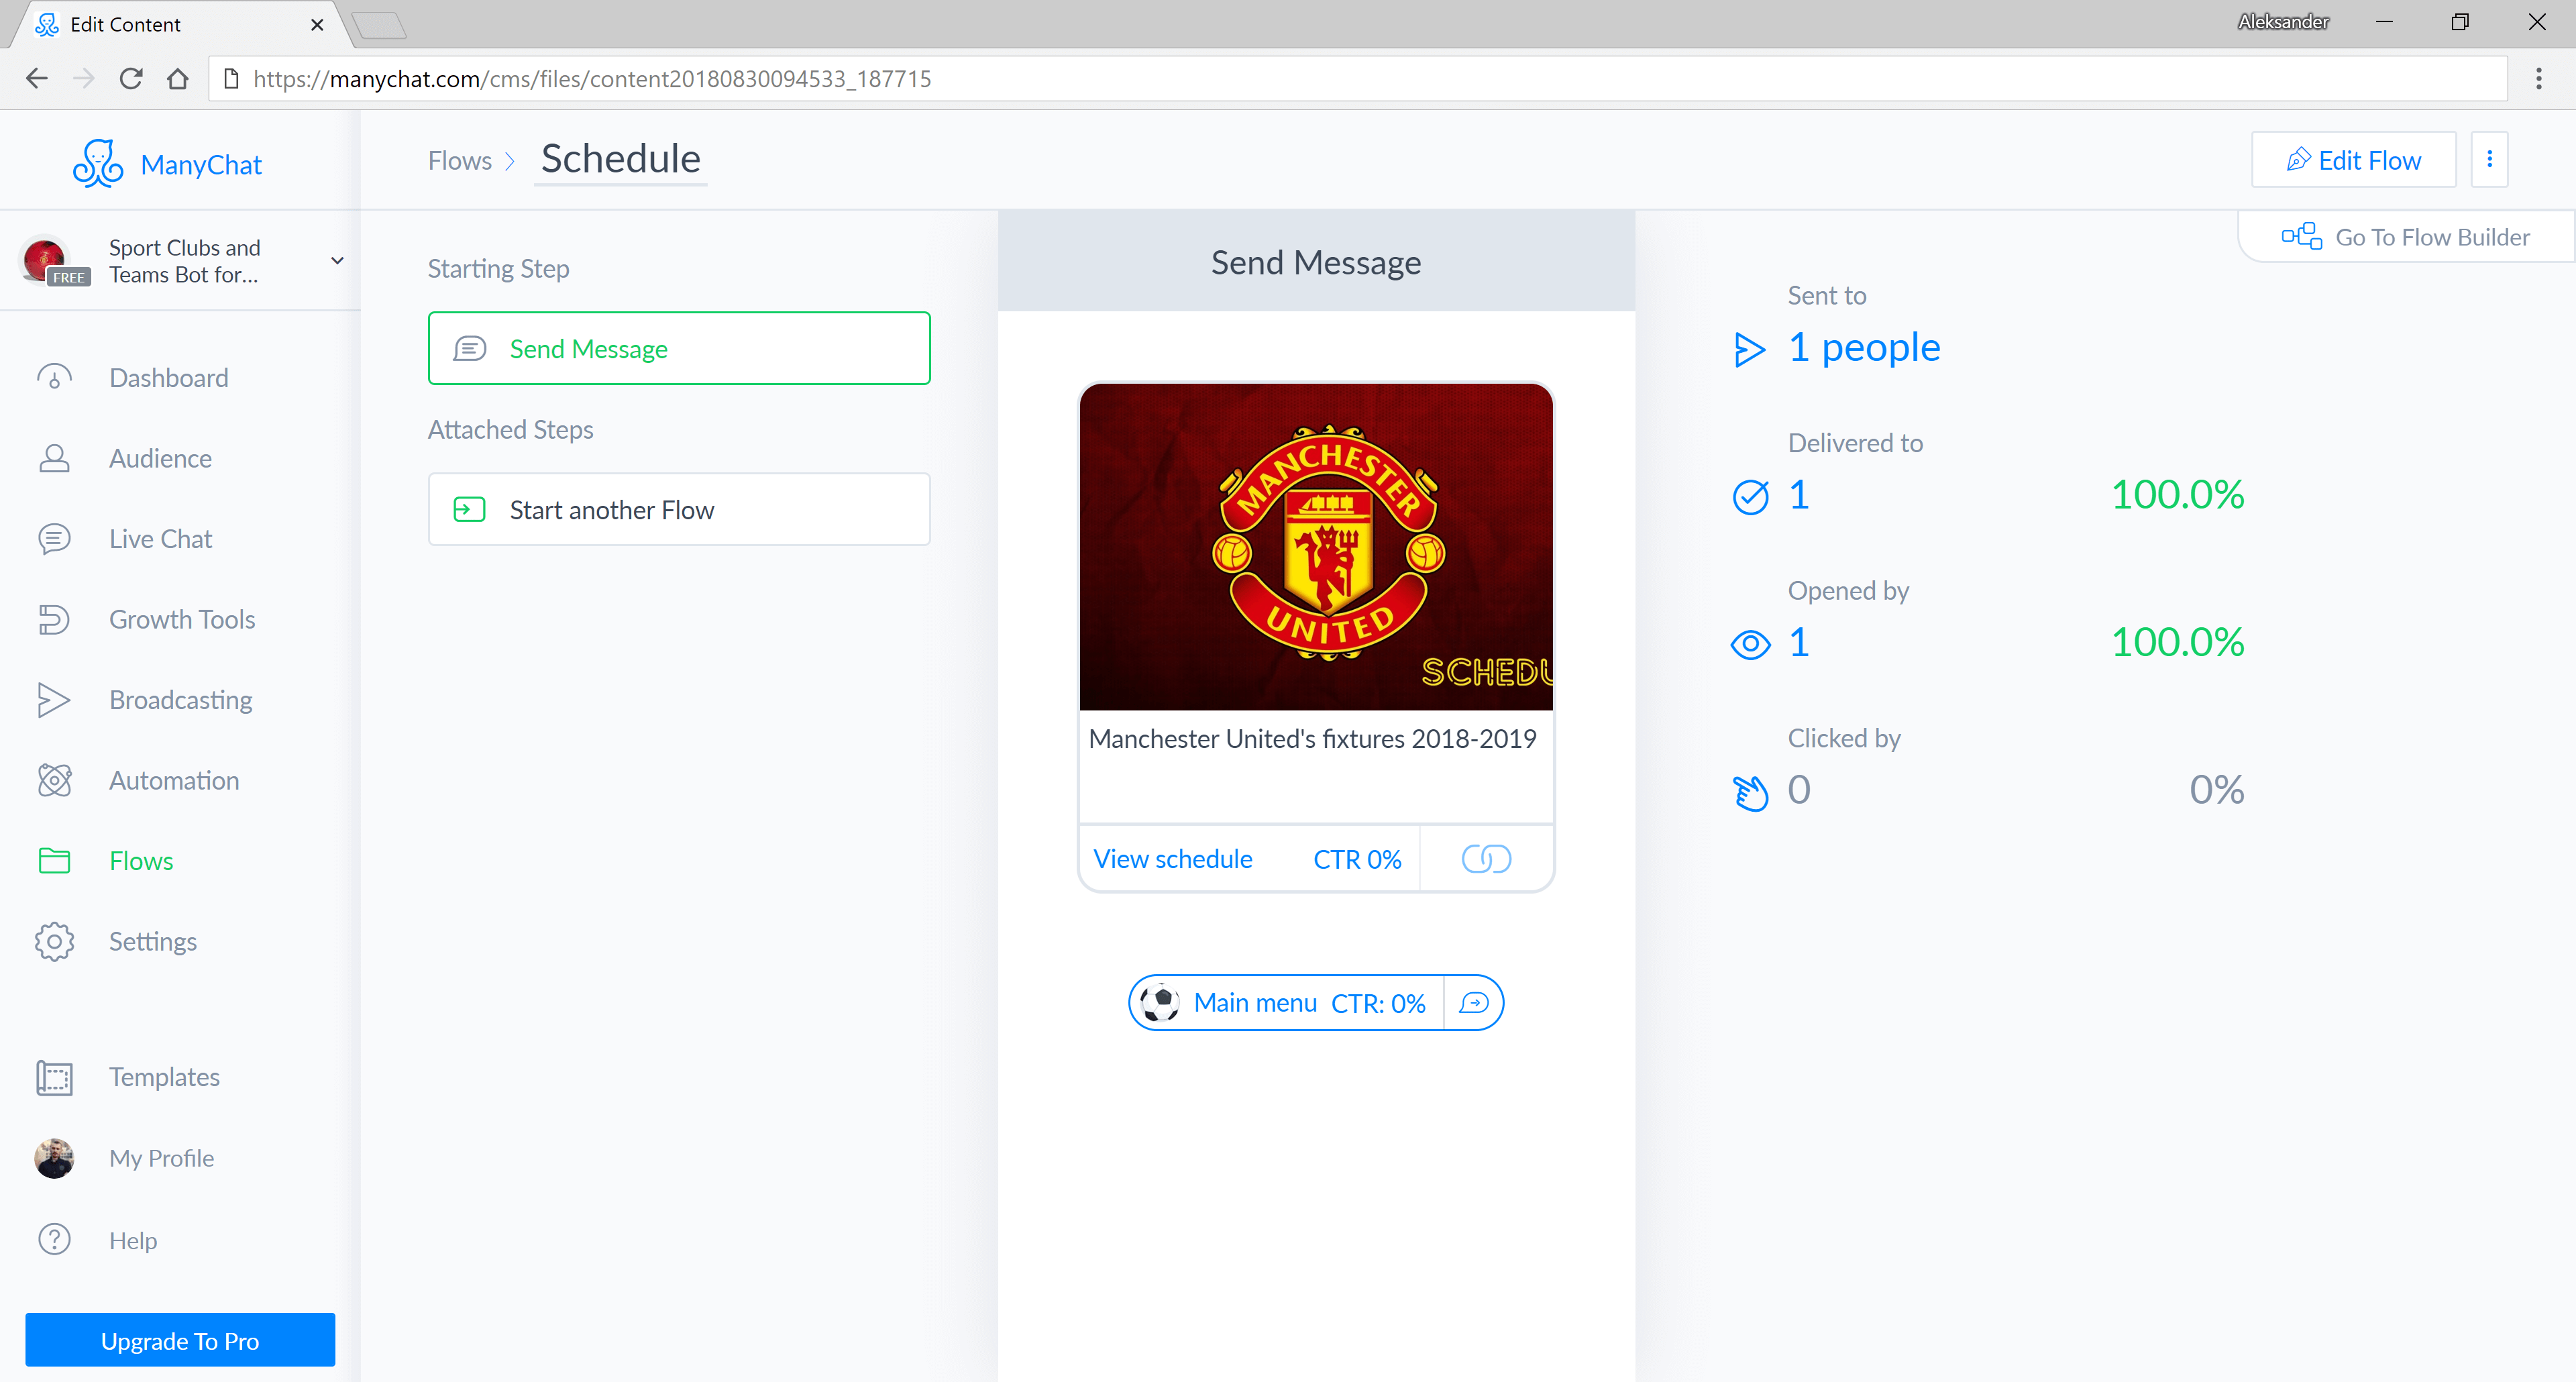 ManyChat flow editor screenshot for Шаблон бот Facebook Messenger для спортивних клубів та команд